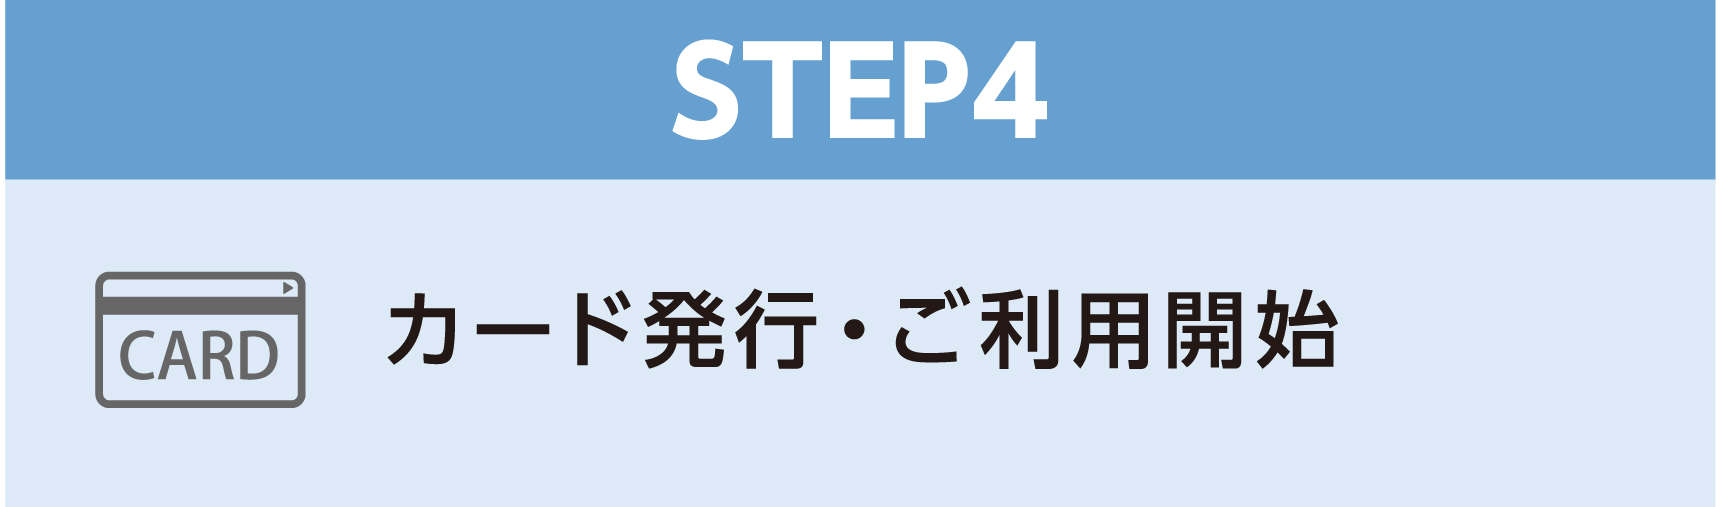 STEP4 J[hsEpJn